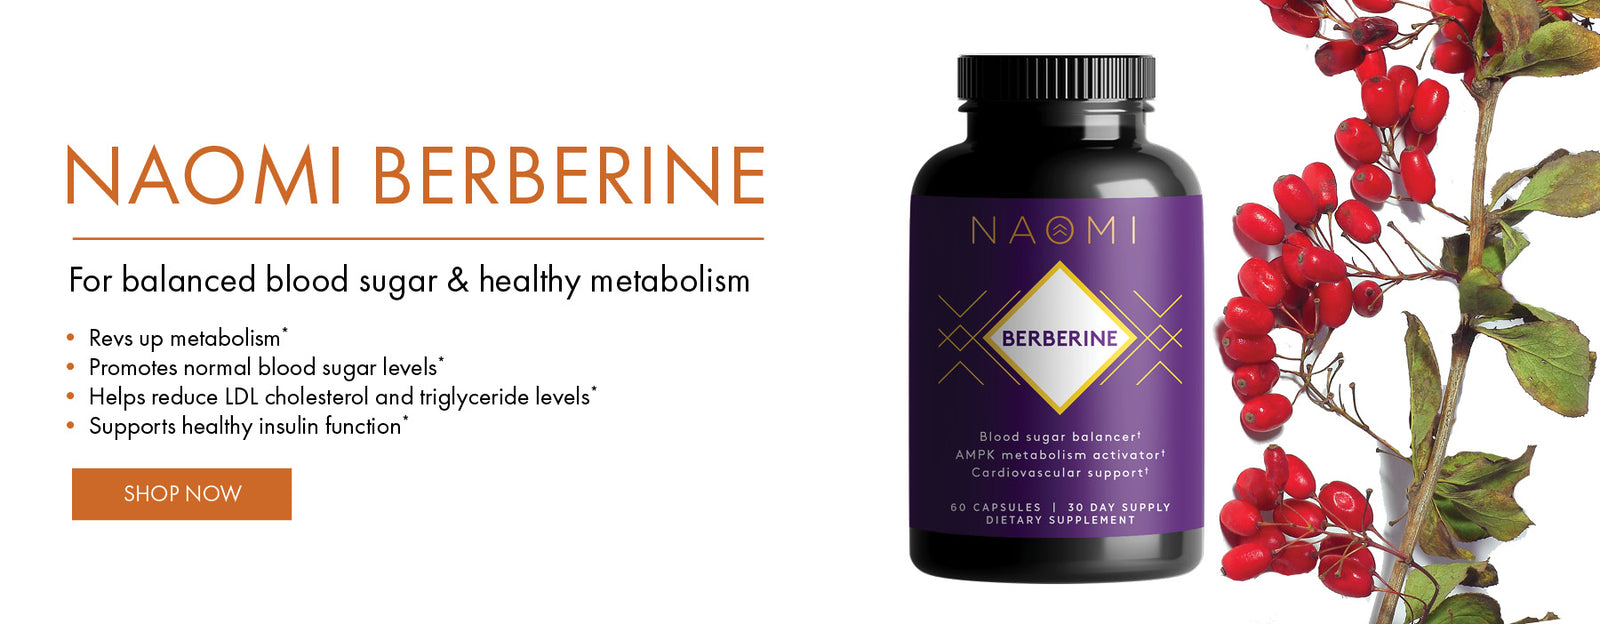 NAOMI BERBERINE For balanced blood sugar & healthy metabolism